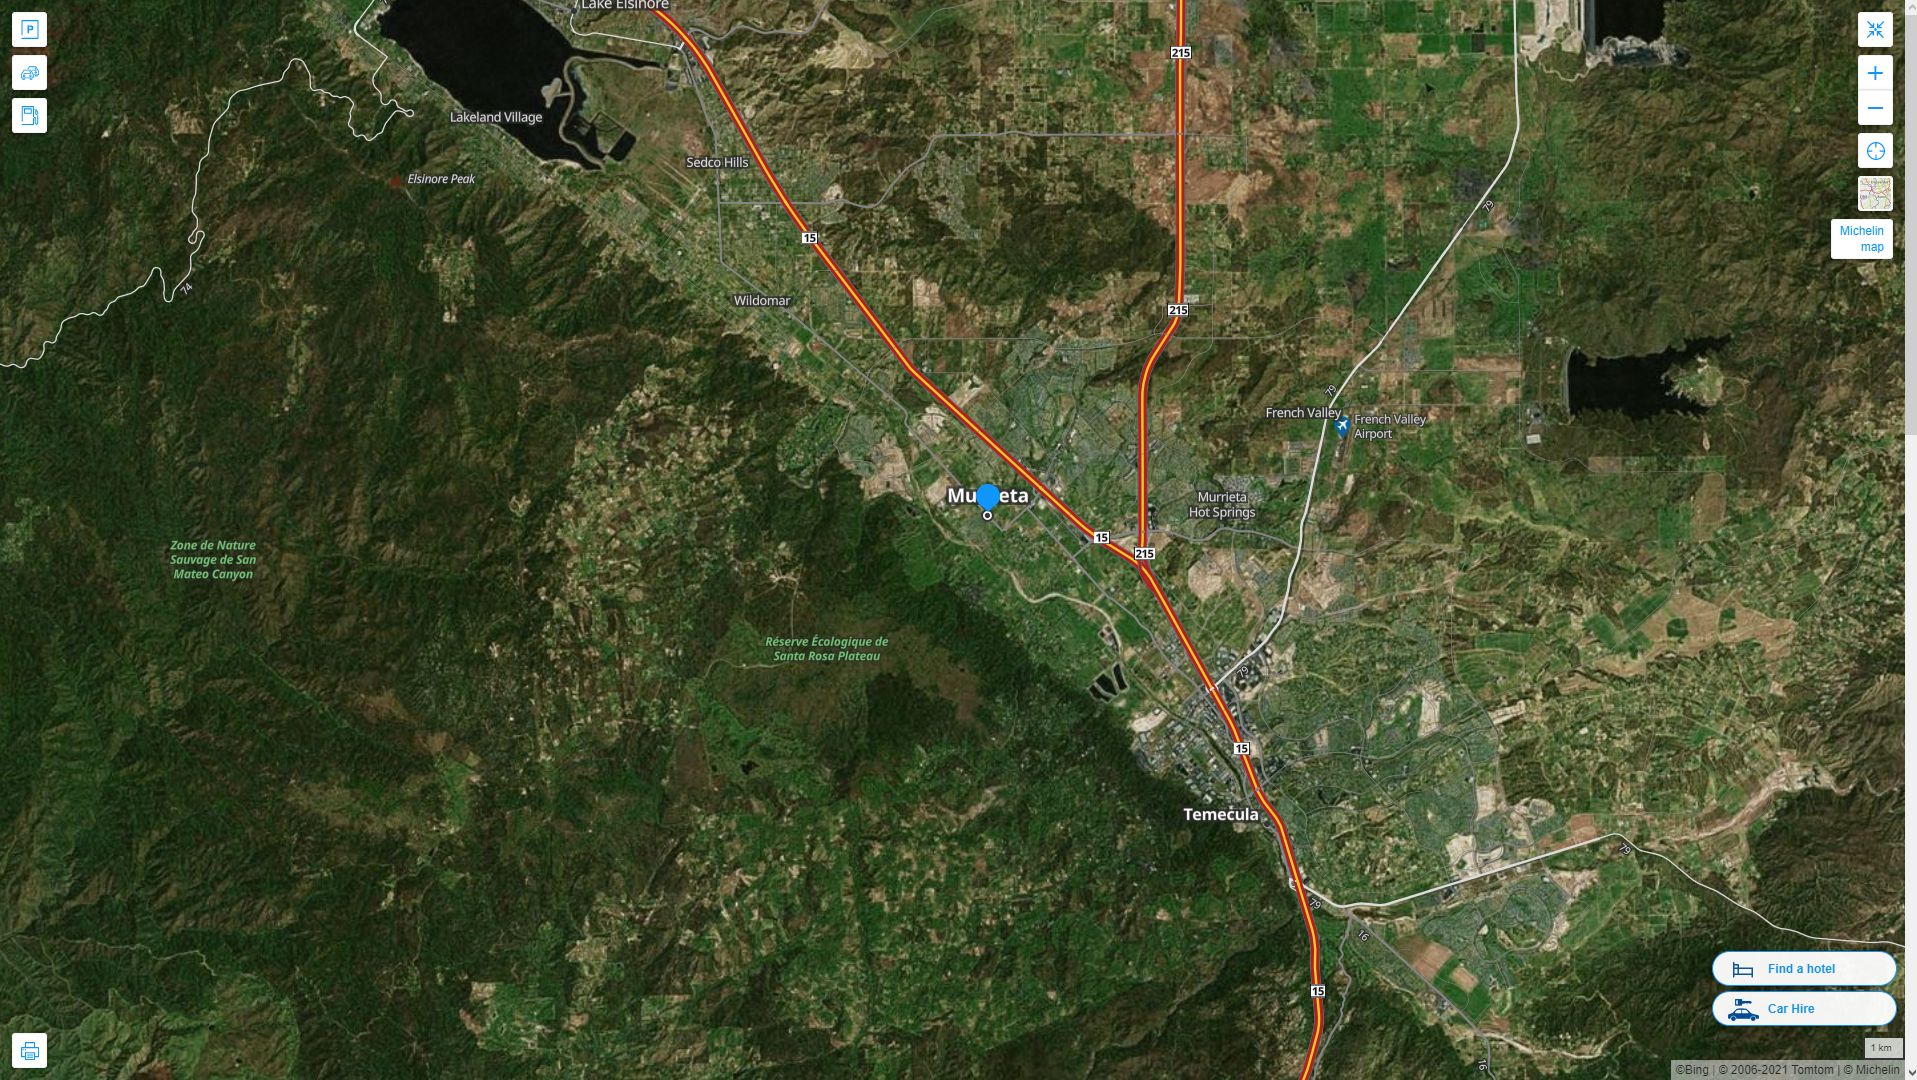 Murrieta California Highway and Road Map with Satellite View